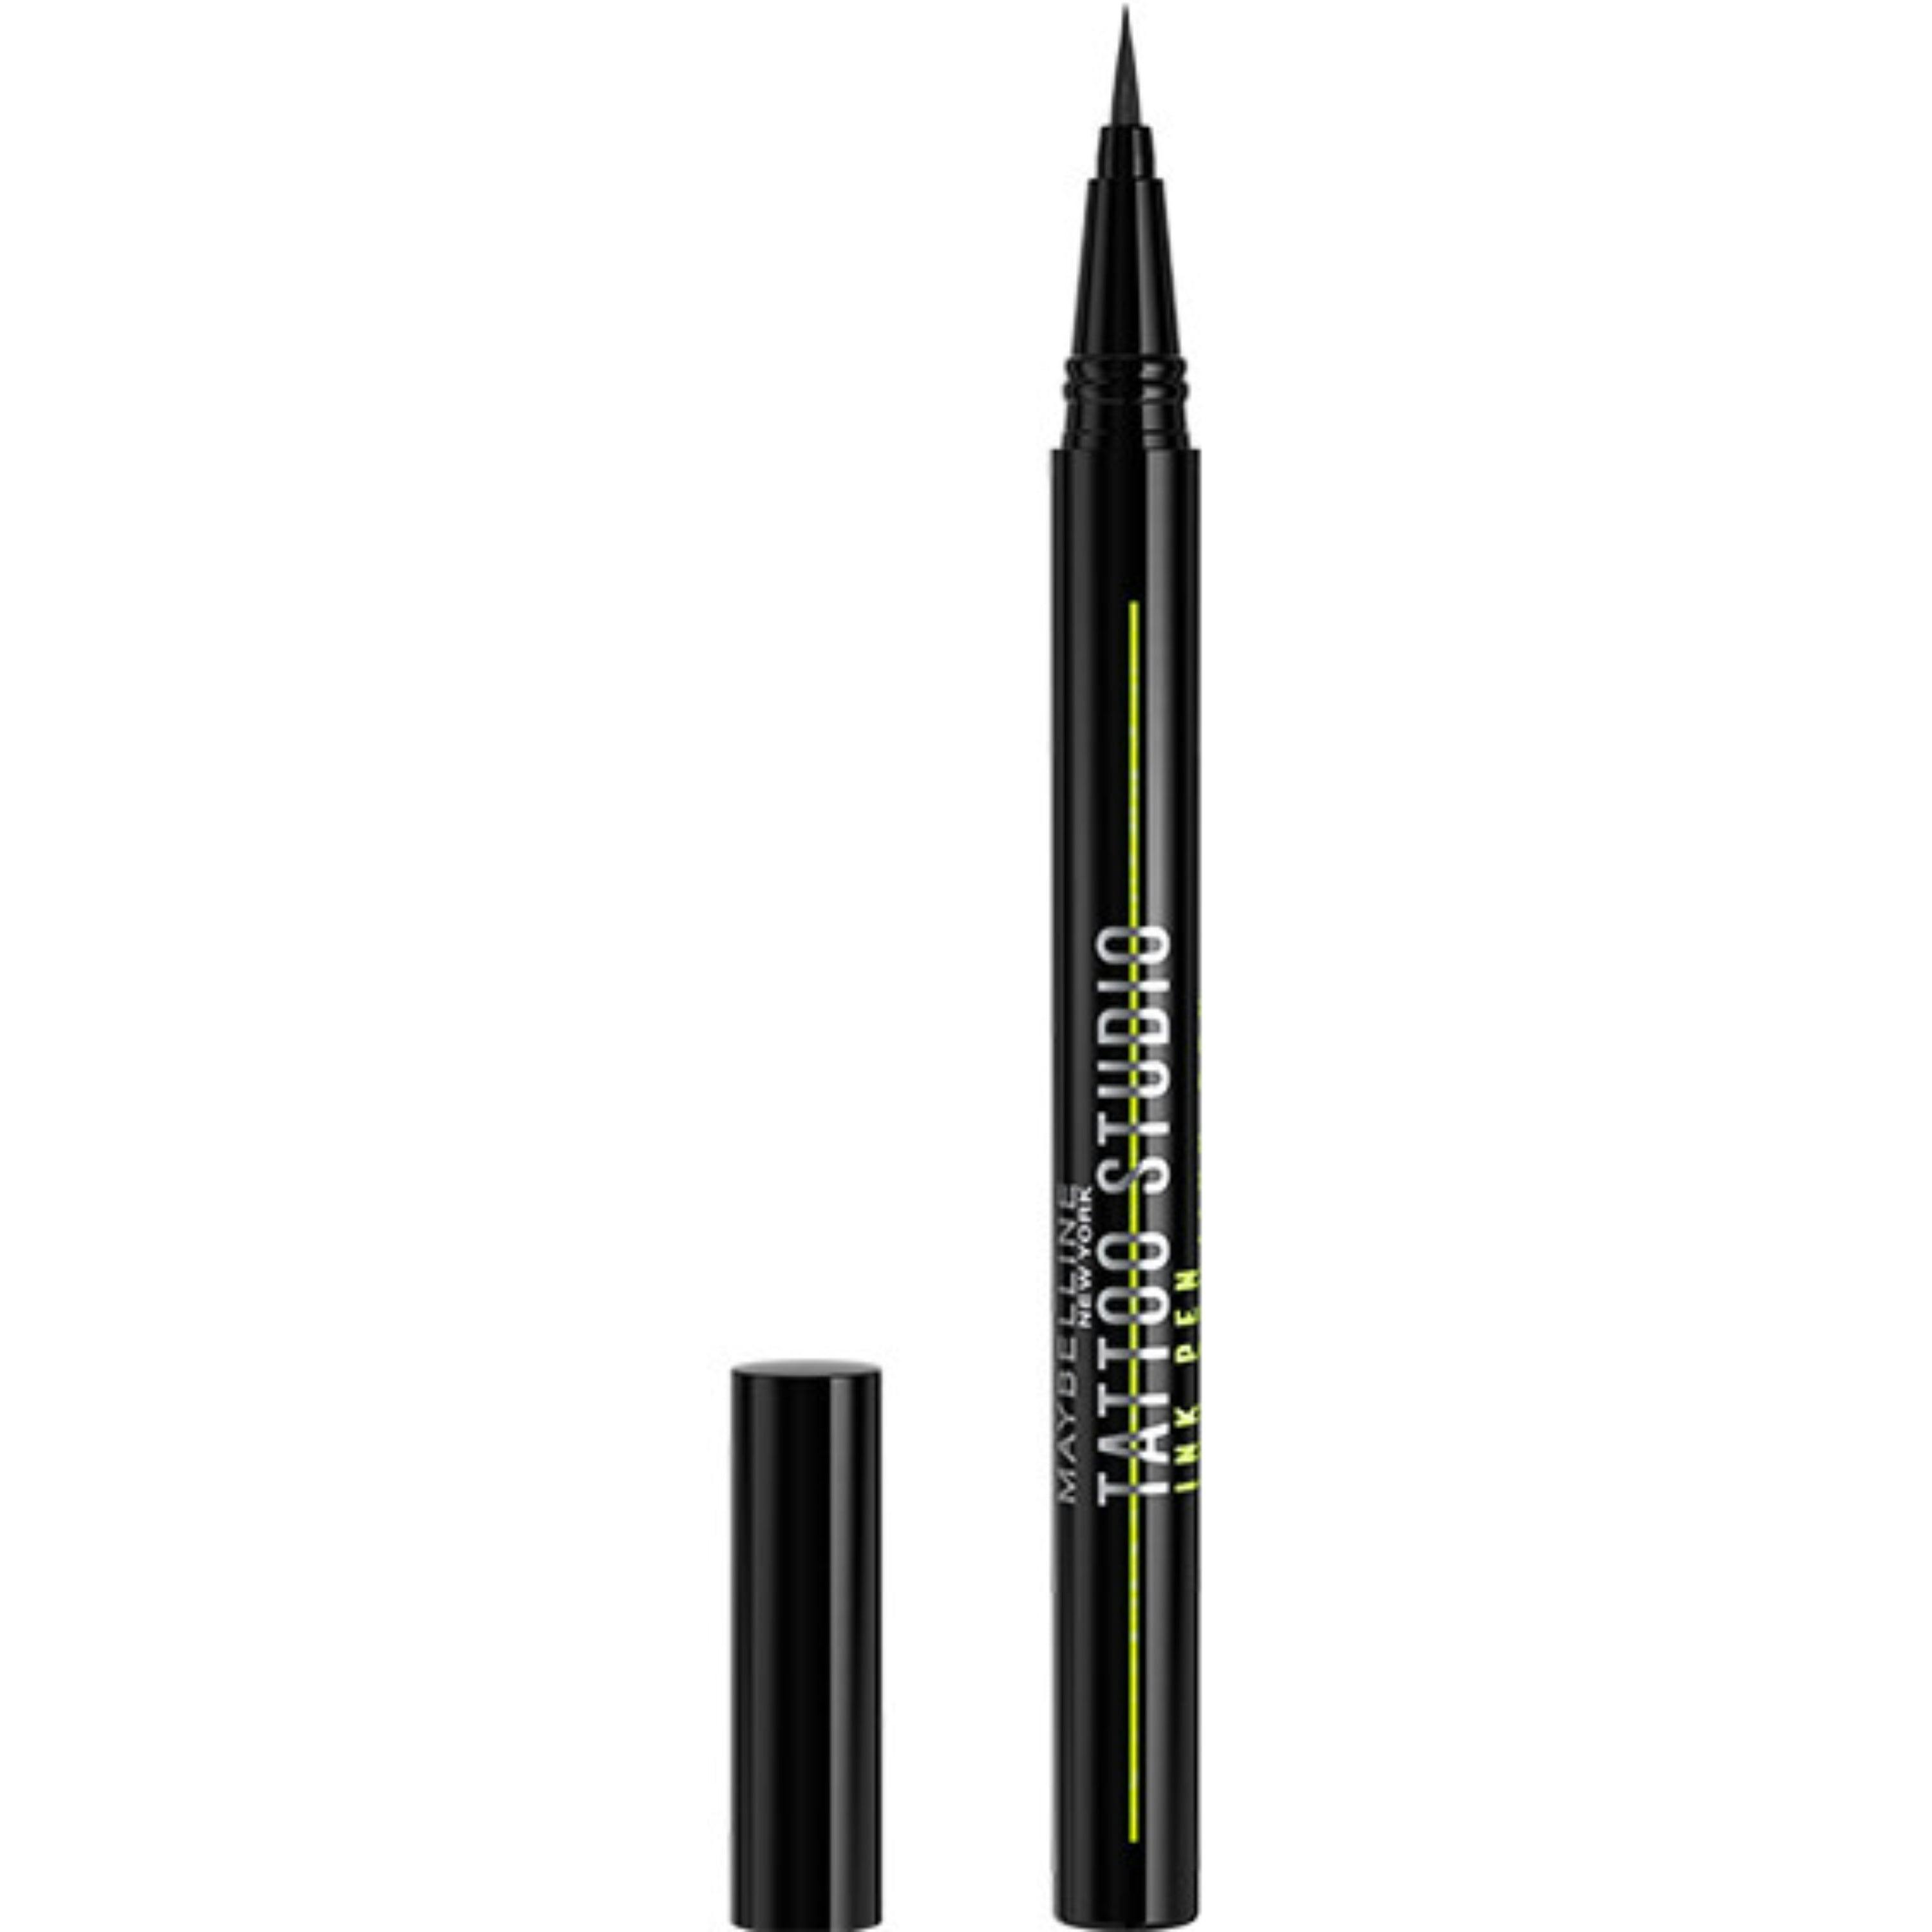 36H Eyeliner Waterproof BLACK Pen Liquid Black Eye Liner Pencil Make Up  2.5g USA